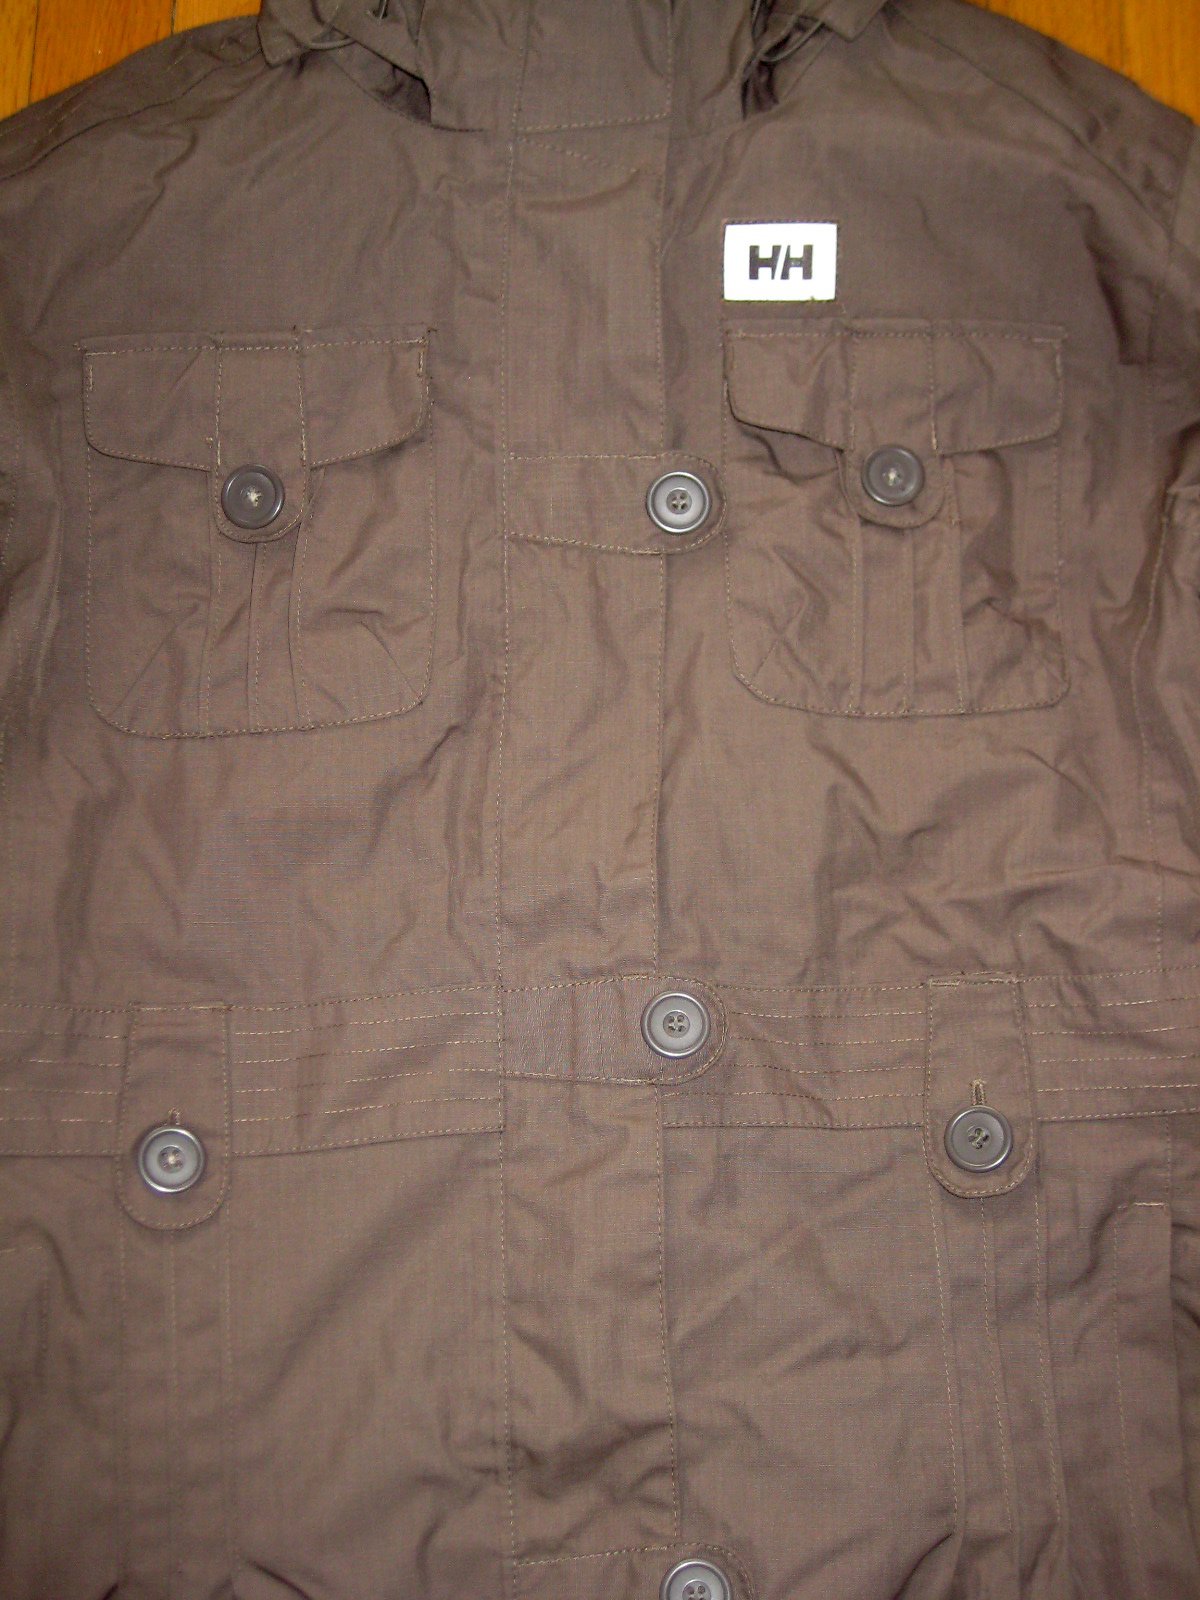 Helly Hansen jacket- $190